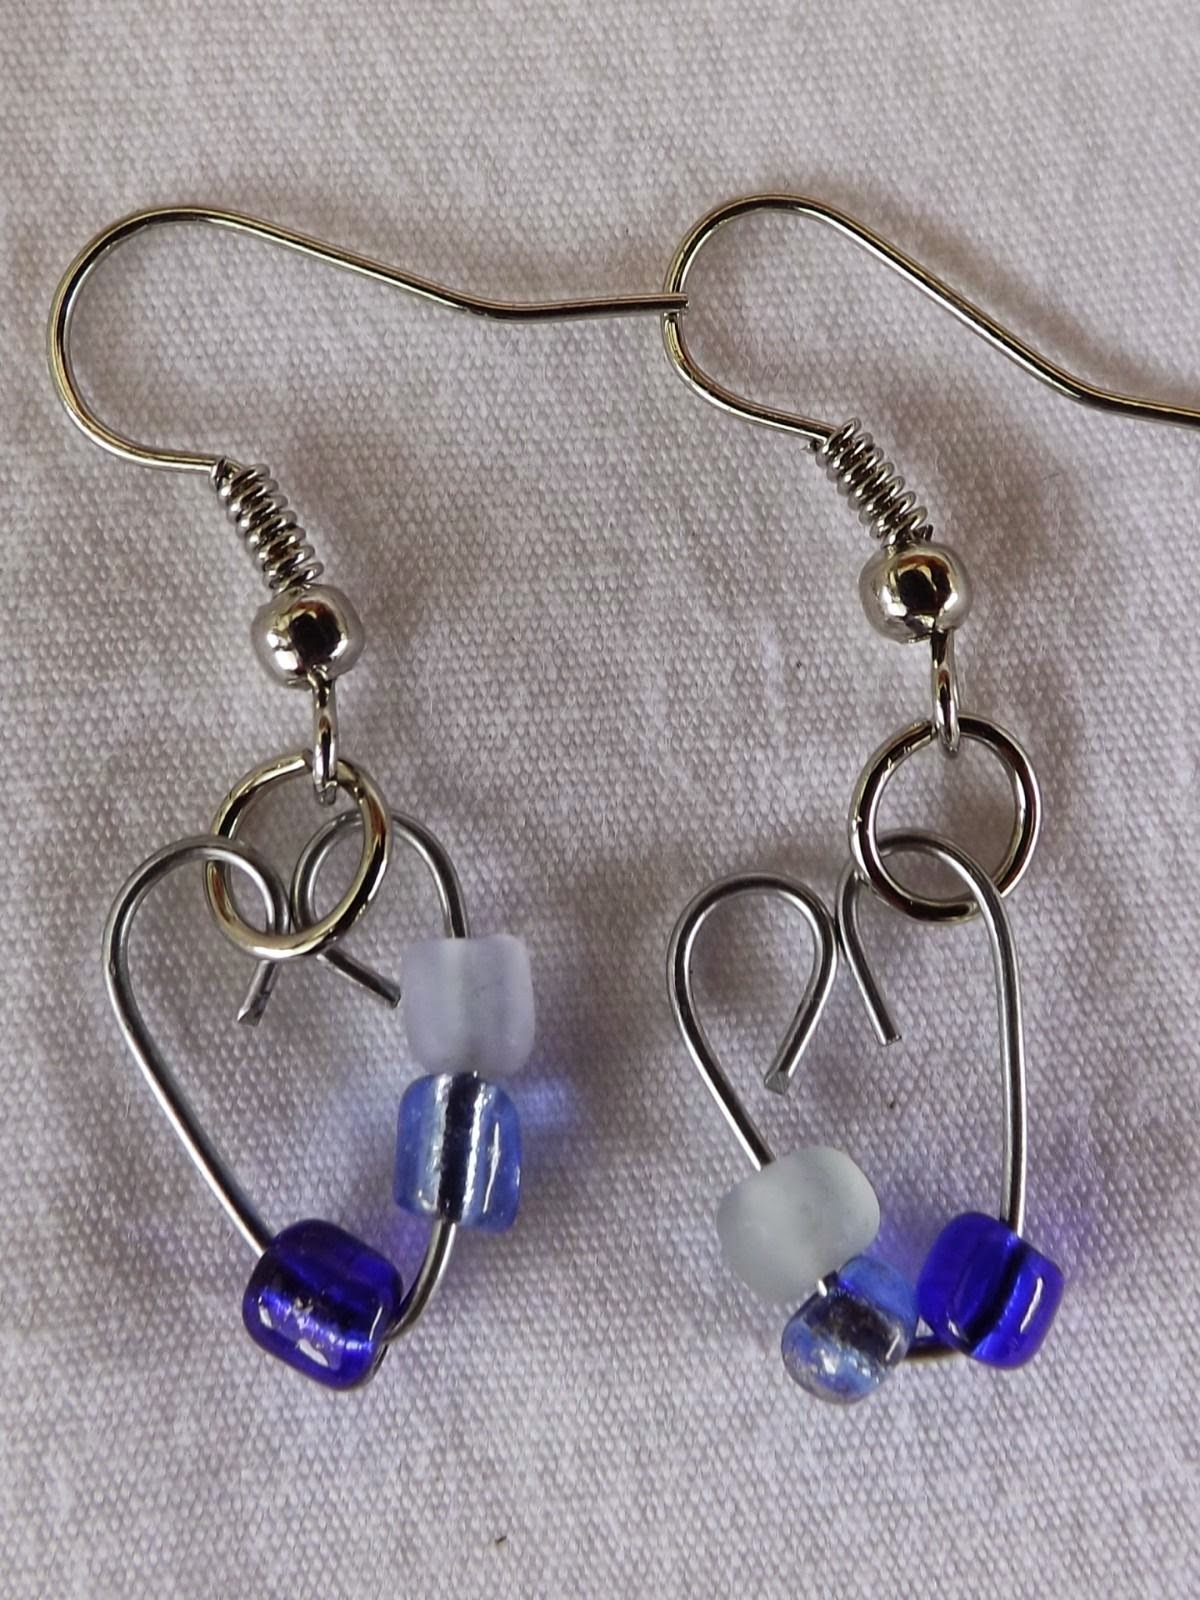 http://www.ebay.com/itm/Single-Heart-Earrings-Handmade-glass-dangle-with-stainless-steel-hook-/261770359867?fb_action_ids=318221801699656&fb_action_types=og.shares